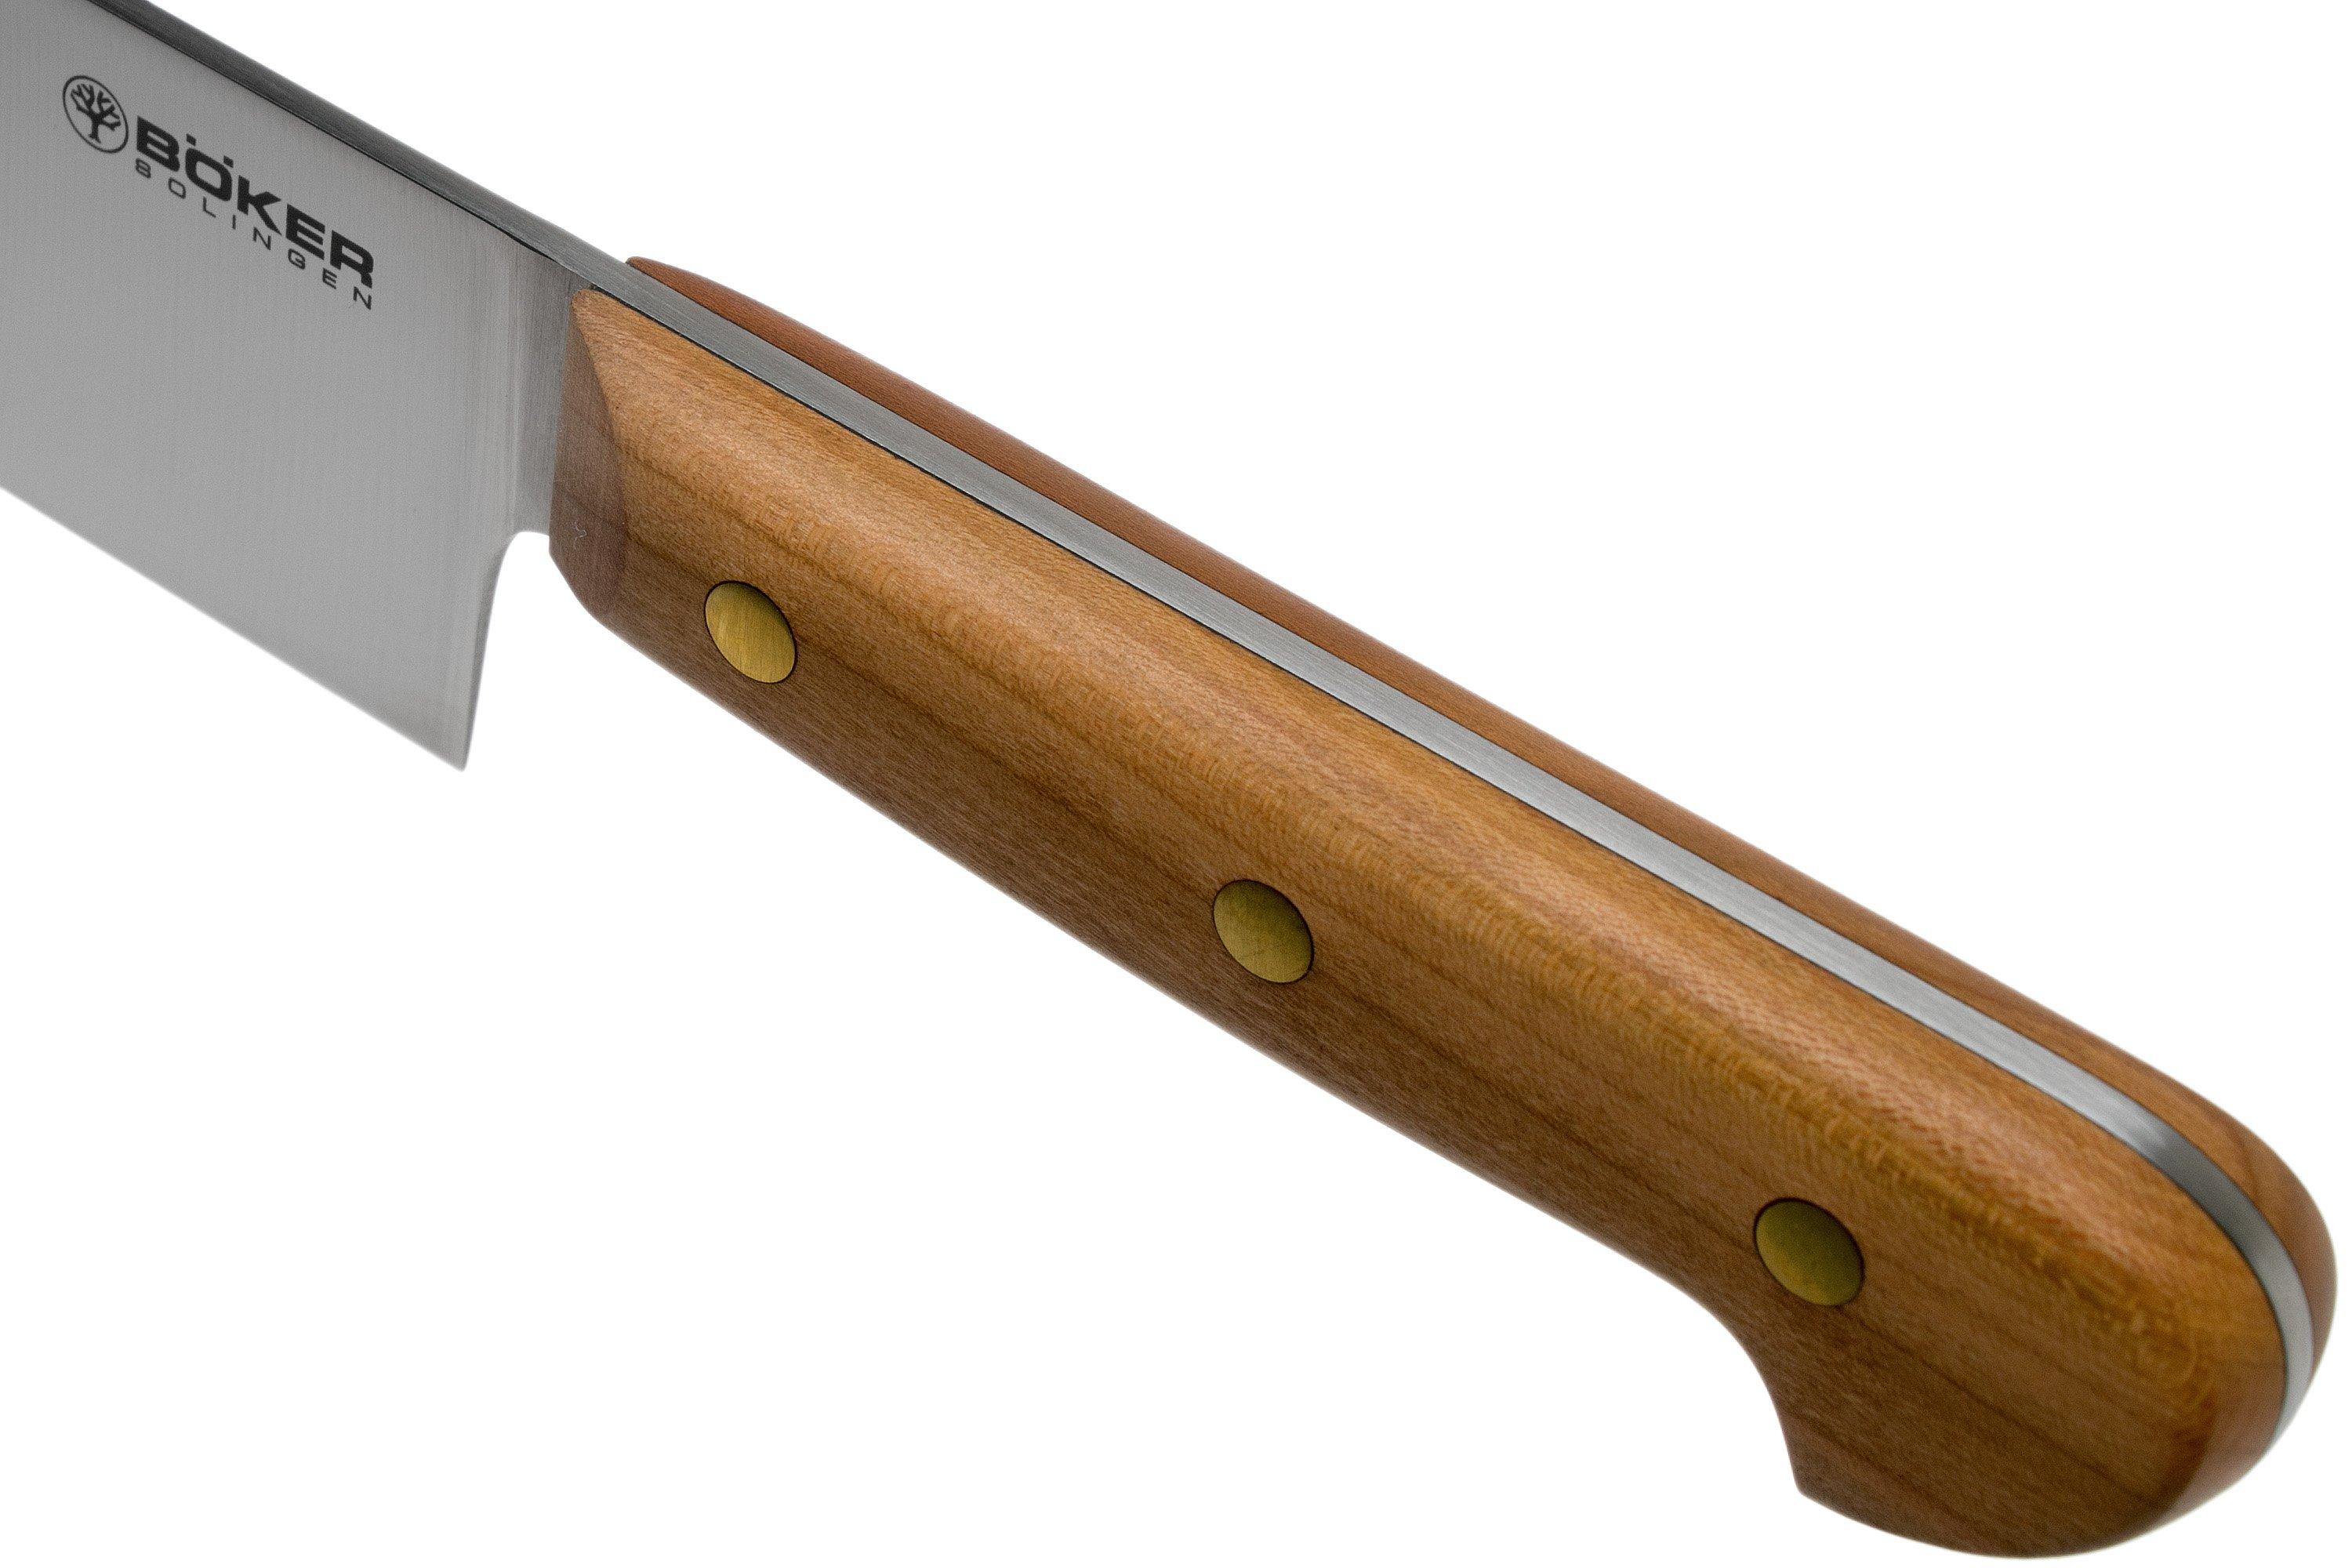 Boker Cottage-Craft Large Chef's Knife 8.66 inch C75 Carbon Steel Satin  Blade, Plum Wood Handles